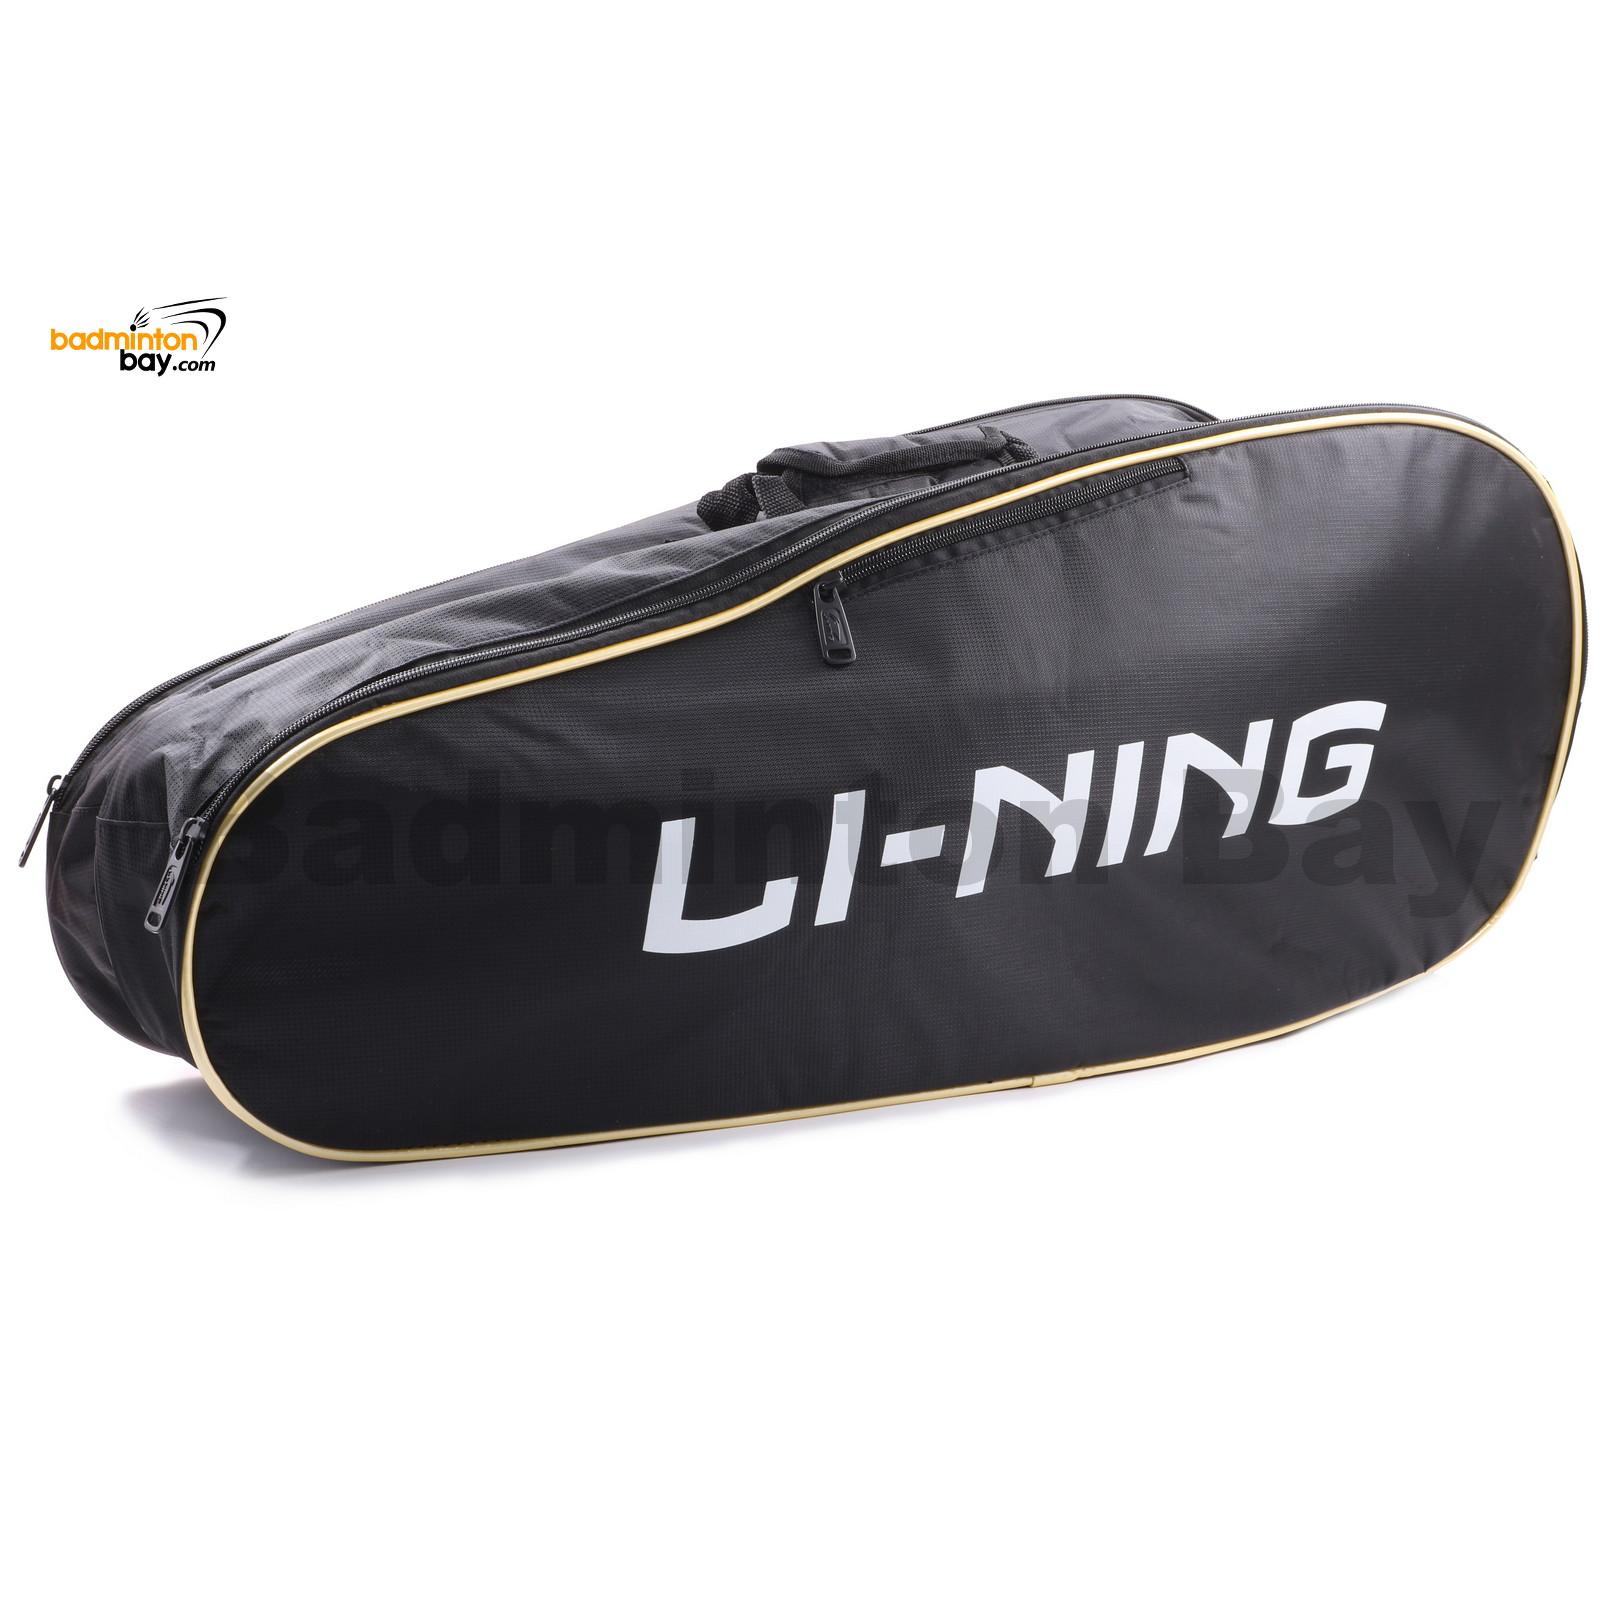 2 Full Compartment ABDN238-2 Red Li Ning Badminton Racquet Thermal Bag 